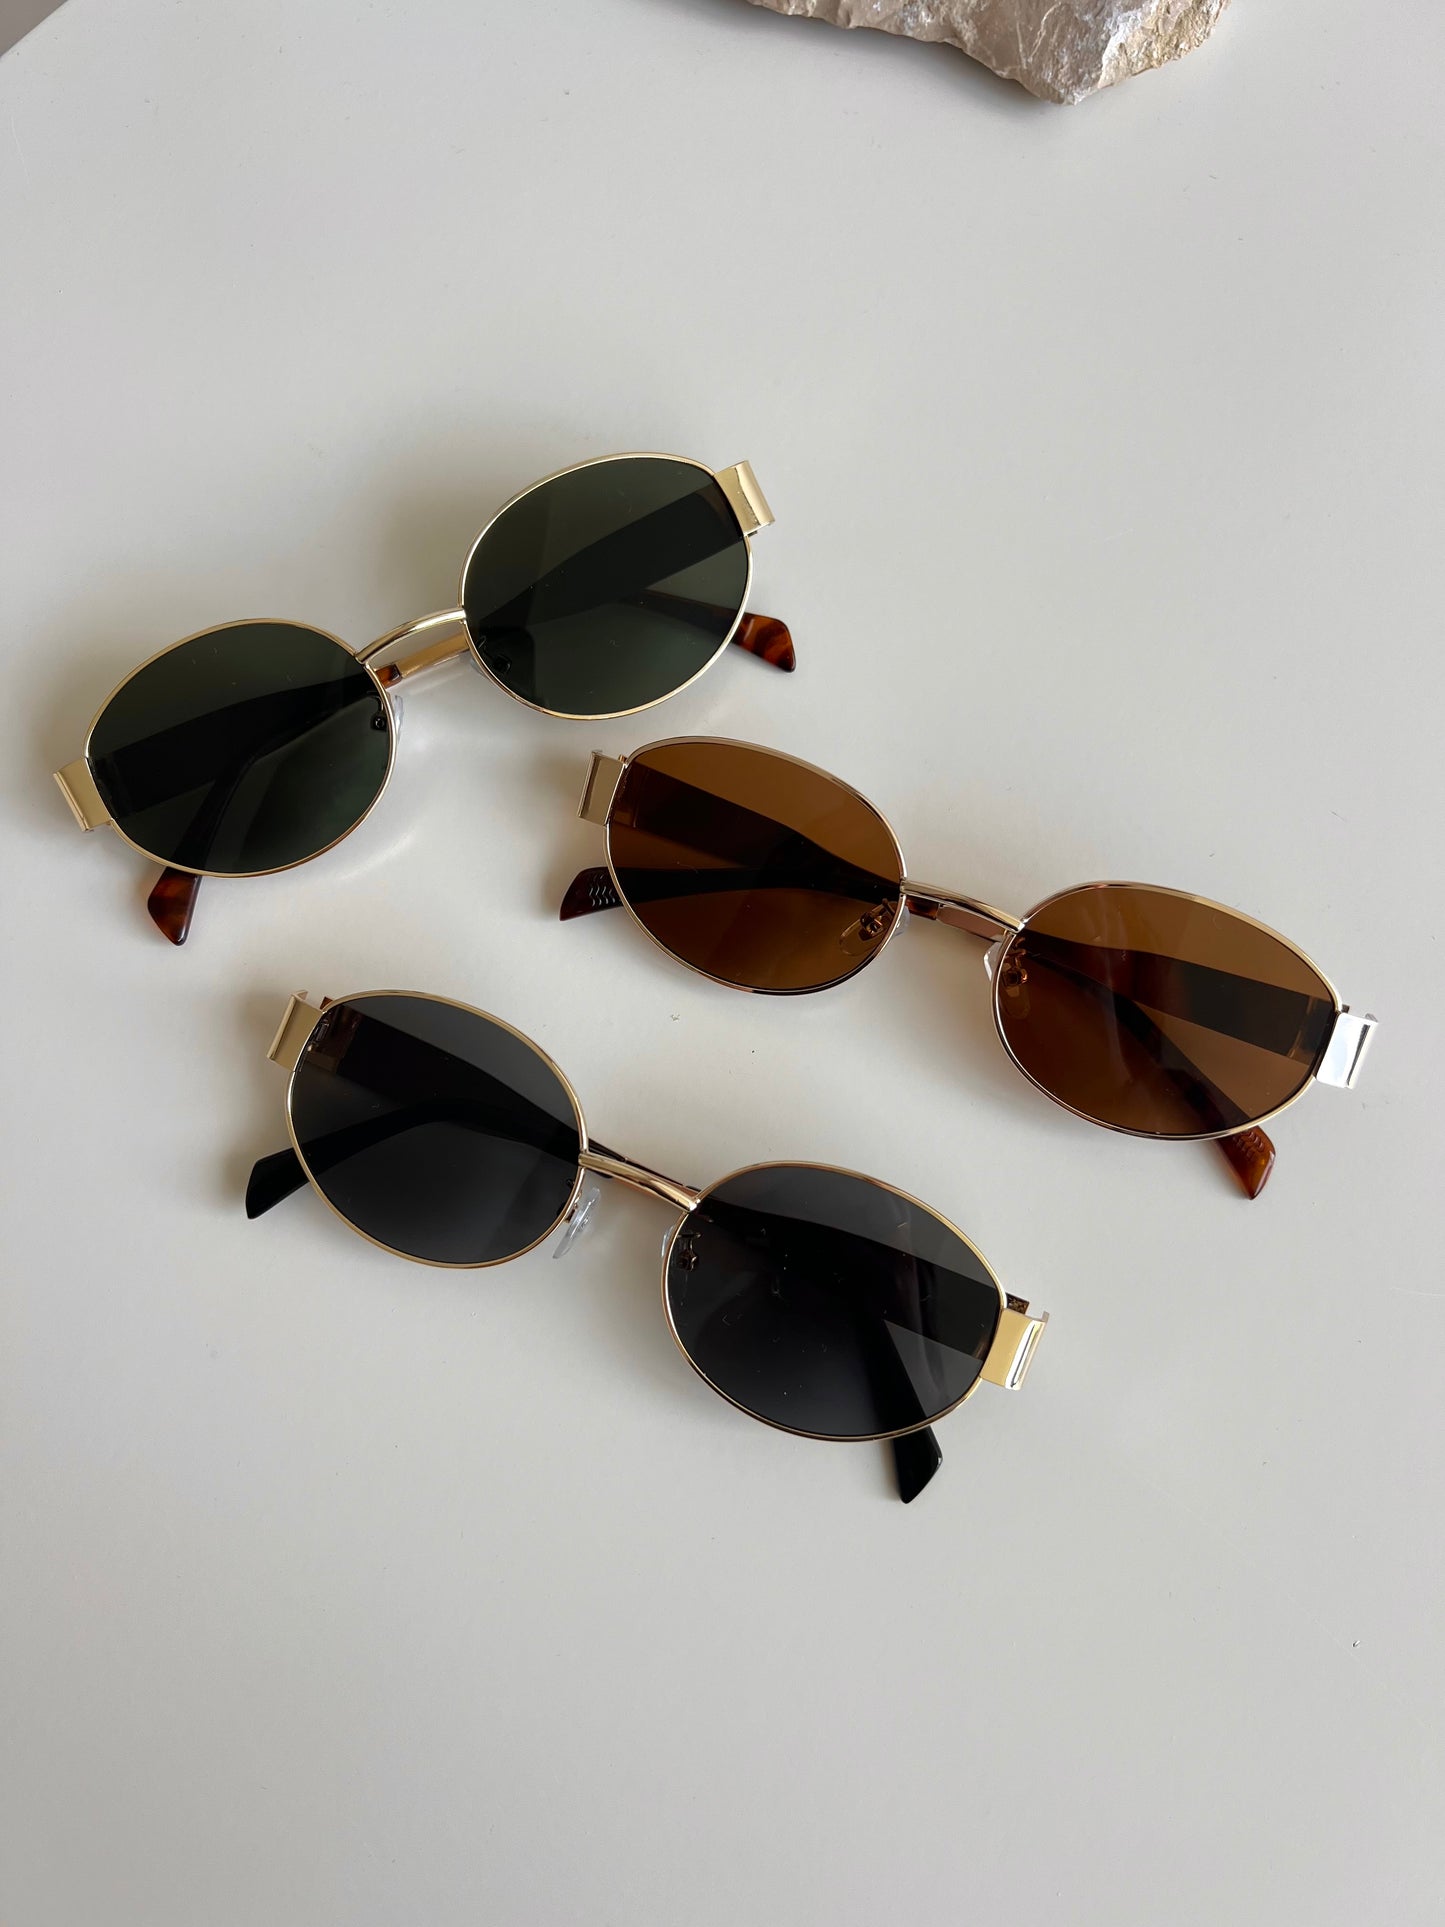 Golden oval sunglasses